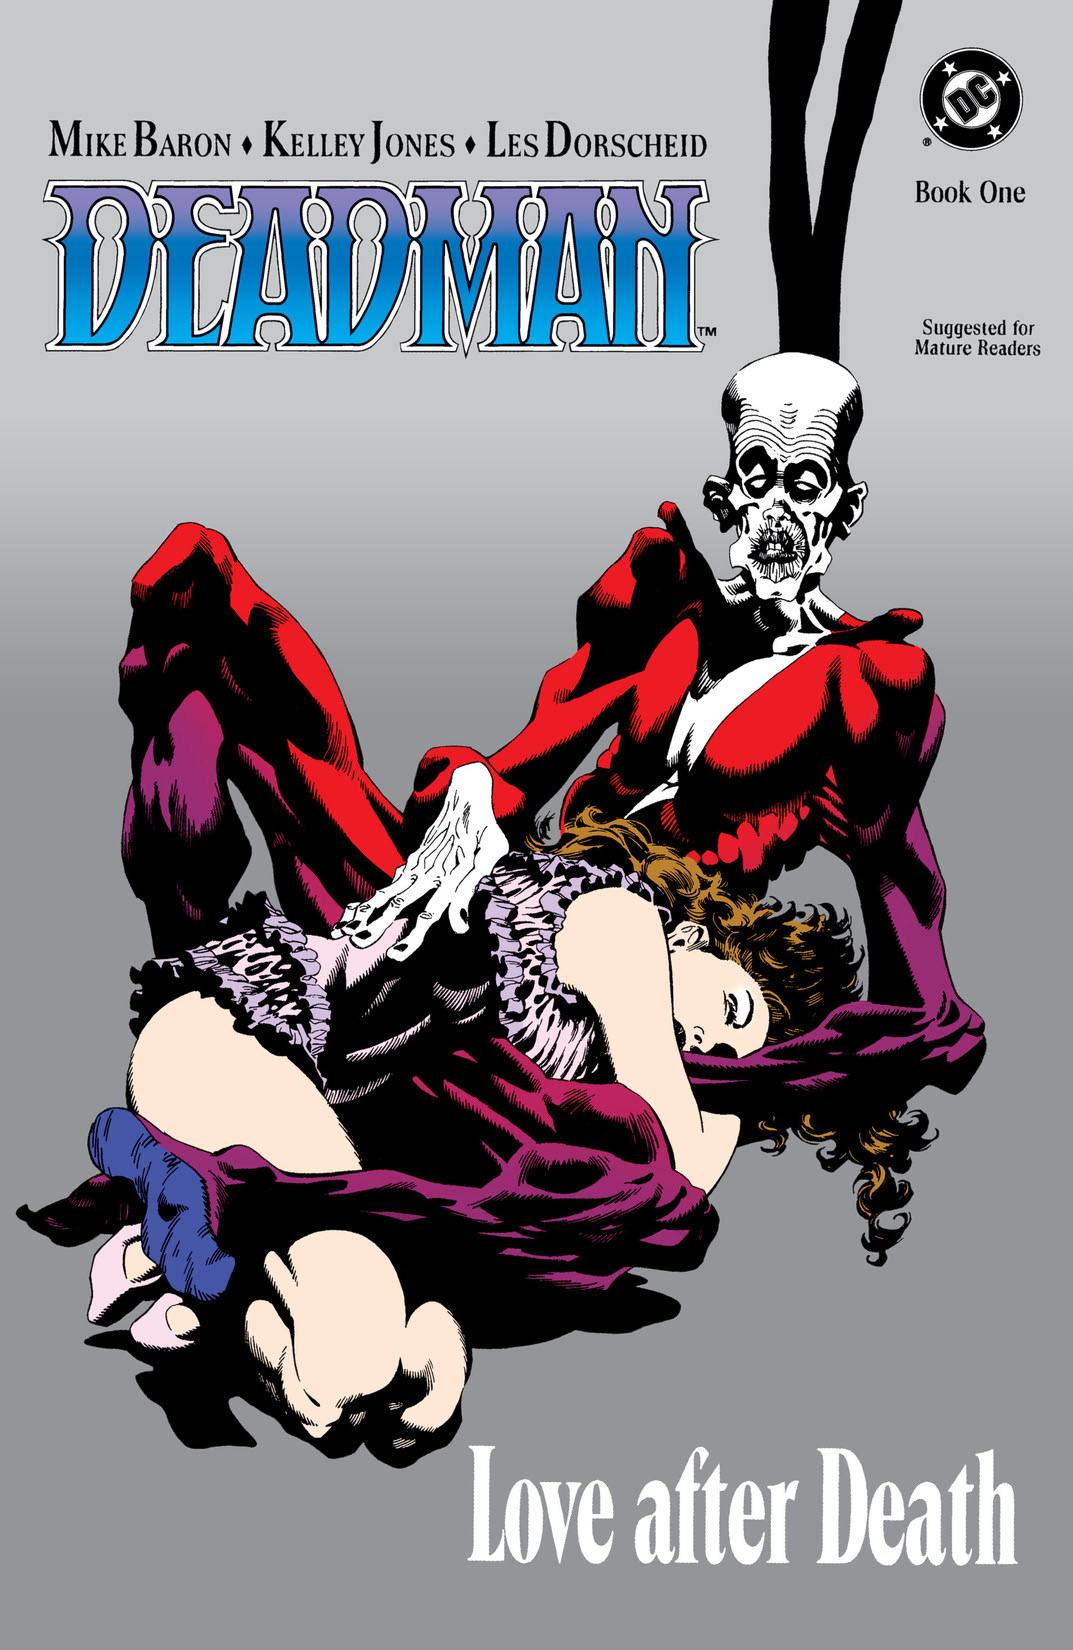 Deadman: Love after Death #1 preview images